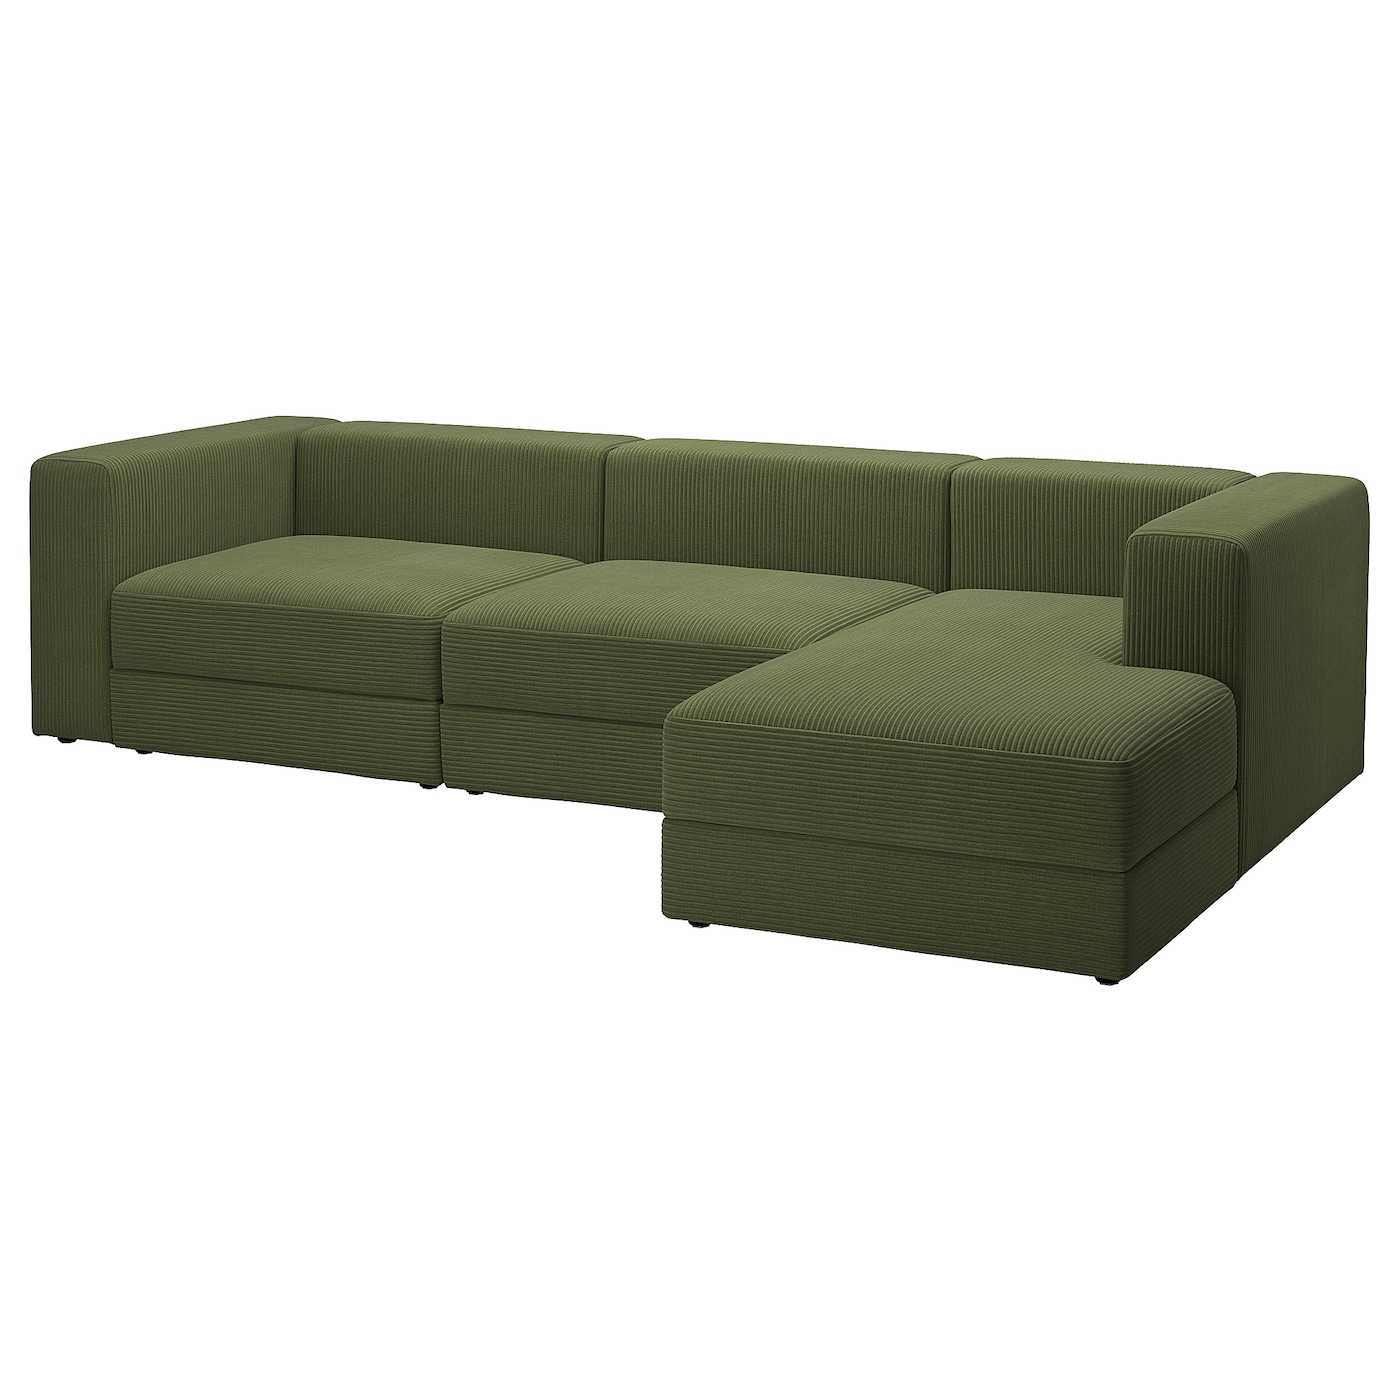 3-местный диван и шезлонг - IKEA JÄTTEBO/JATTEBO,  71x160x310см, зеленый, ЙЕТТЕБО